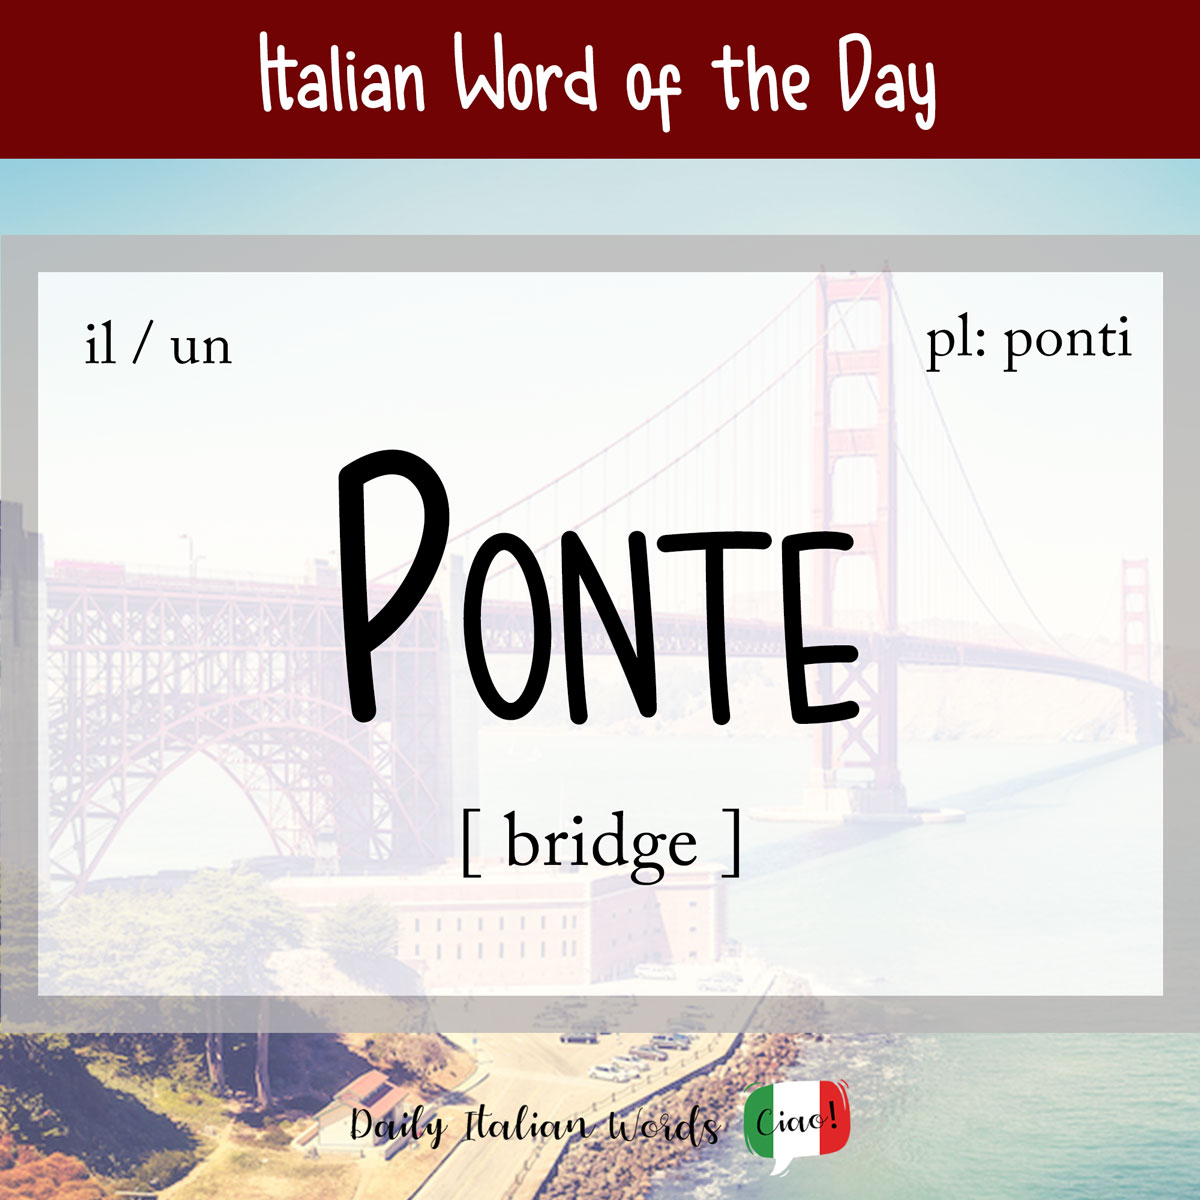 Italian word for bridge, ponte